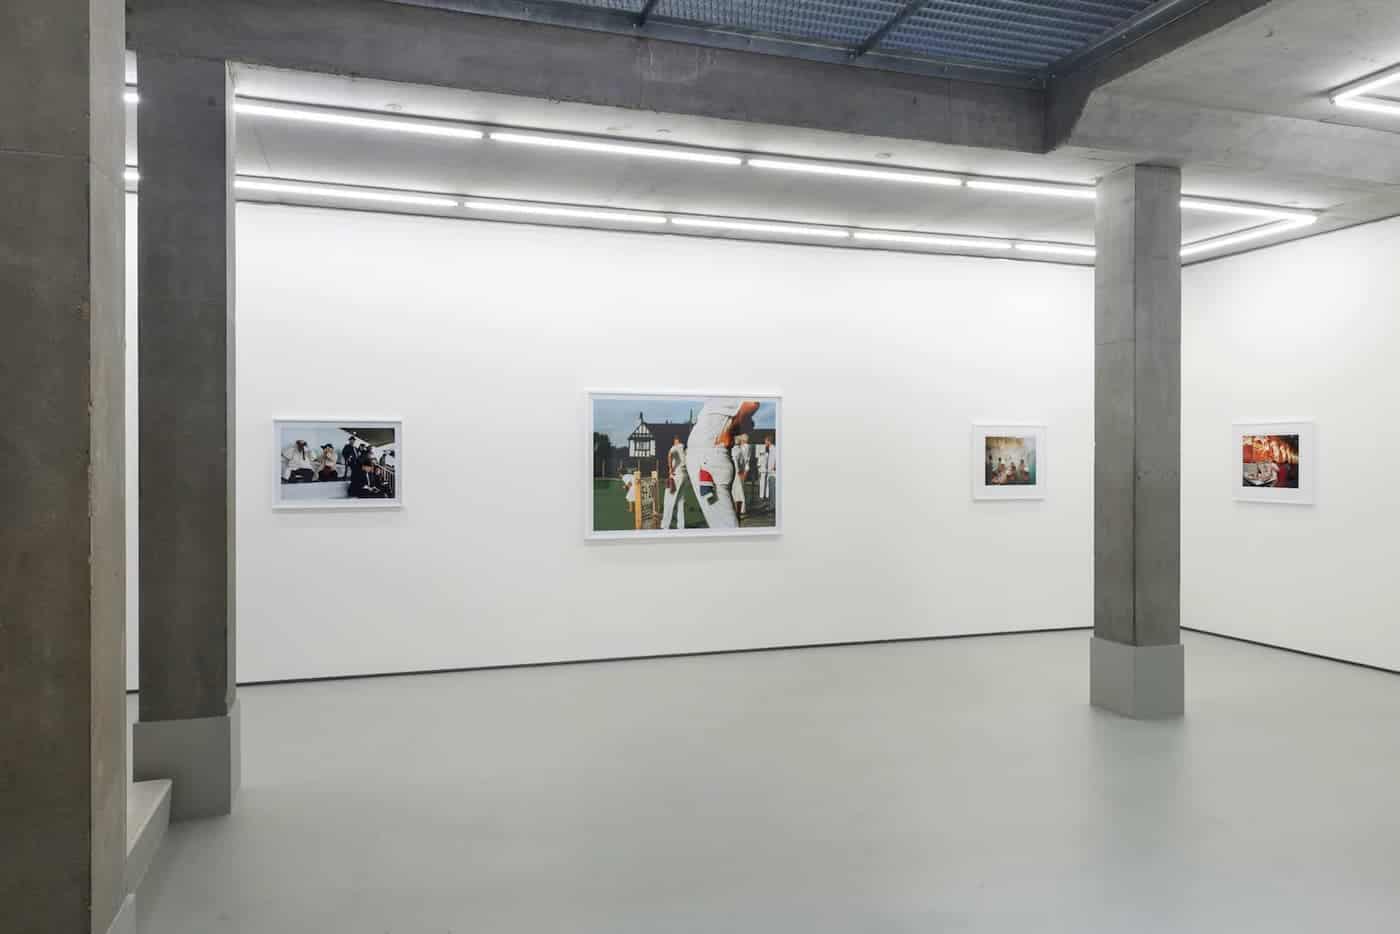 White Gallery - Contemporary Minimalist Location - The Location Guys